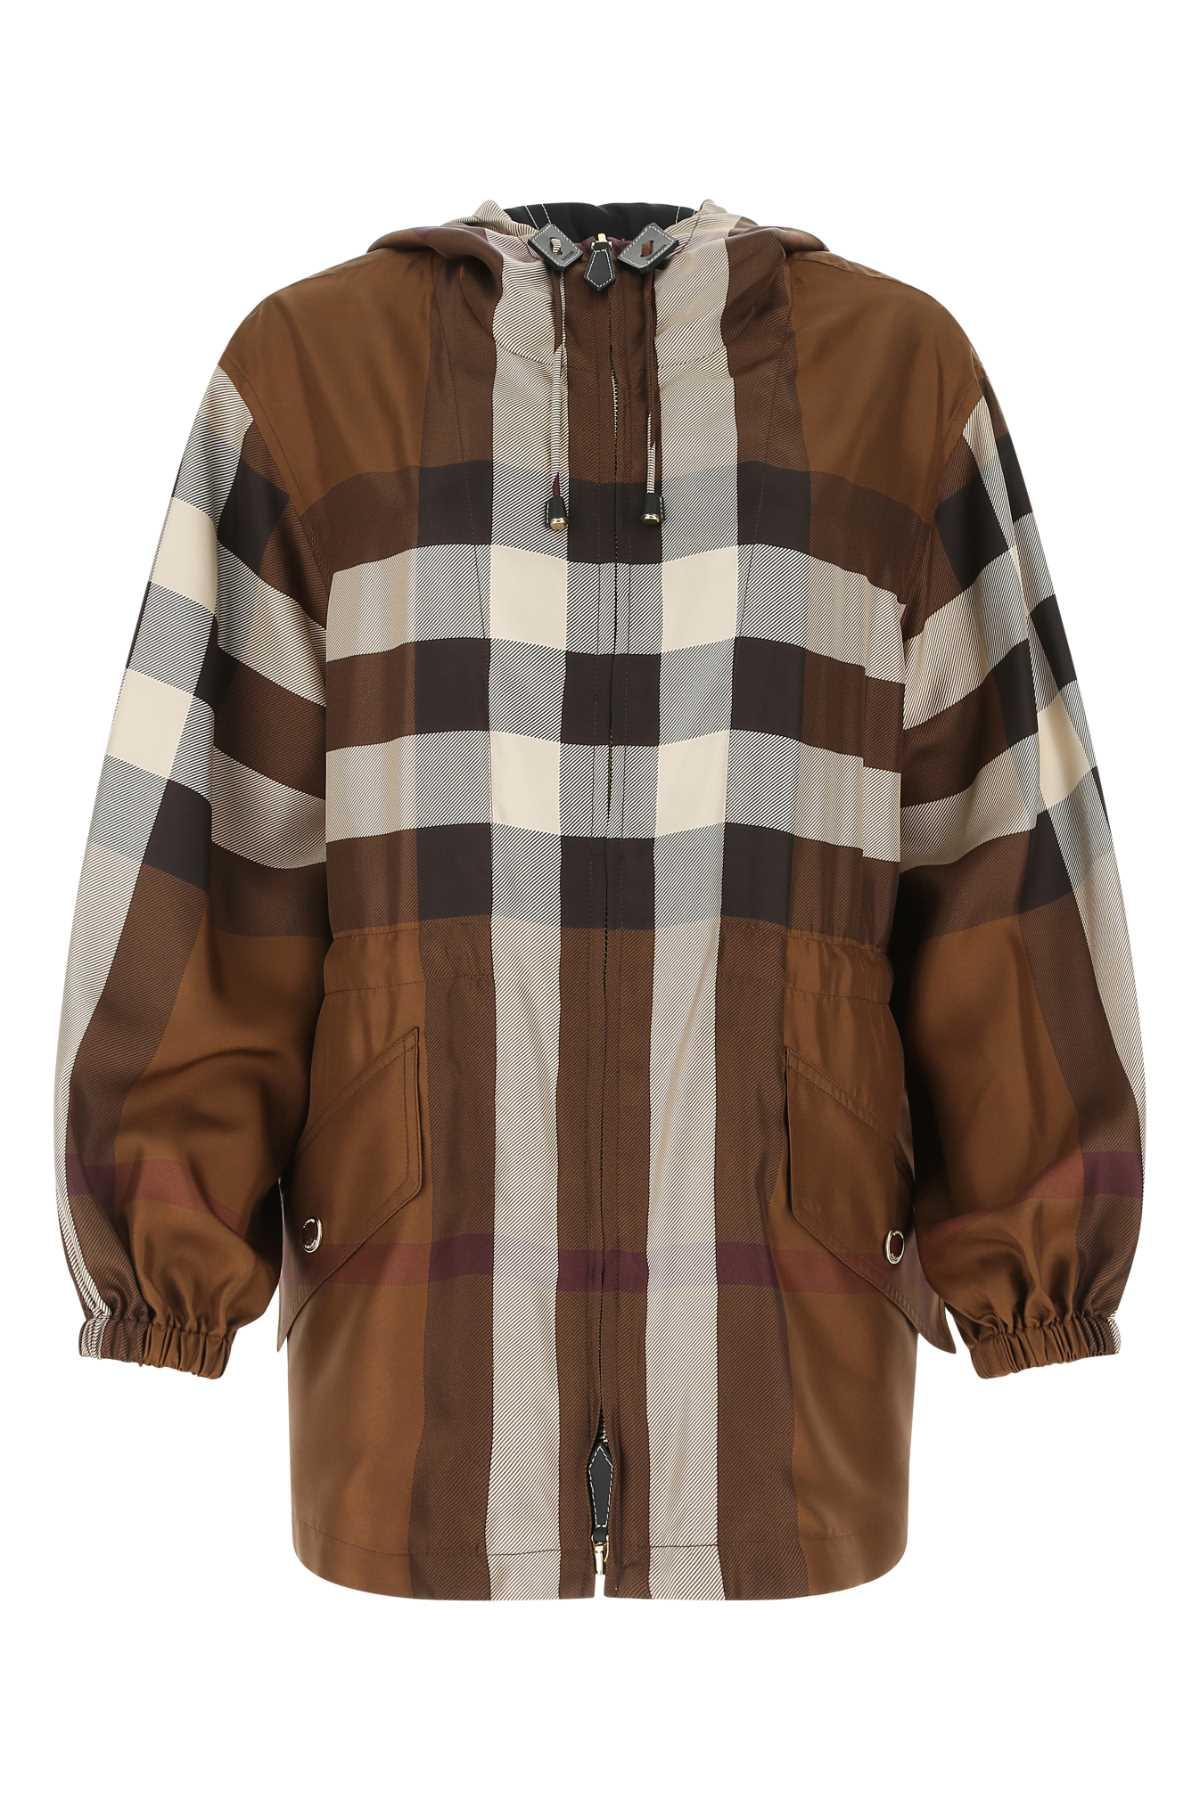 Burberry Check Lightweight Hooded Jacket